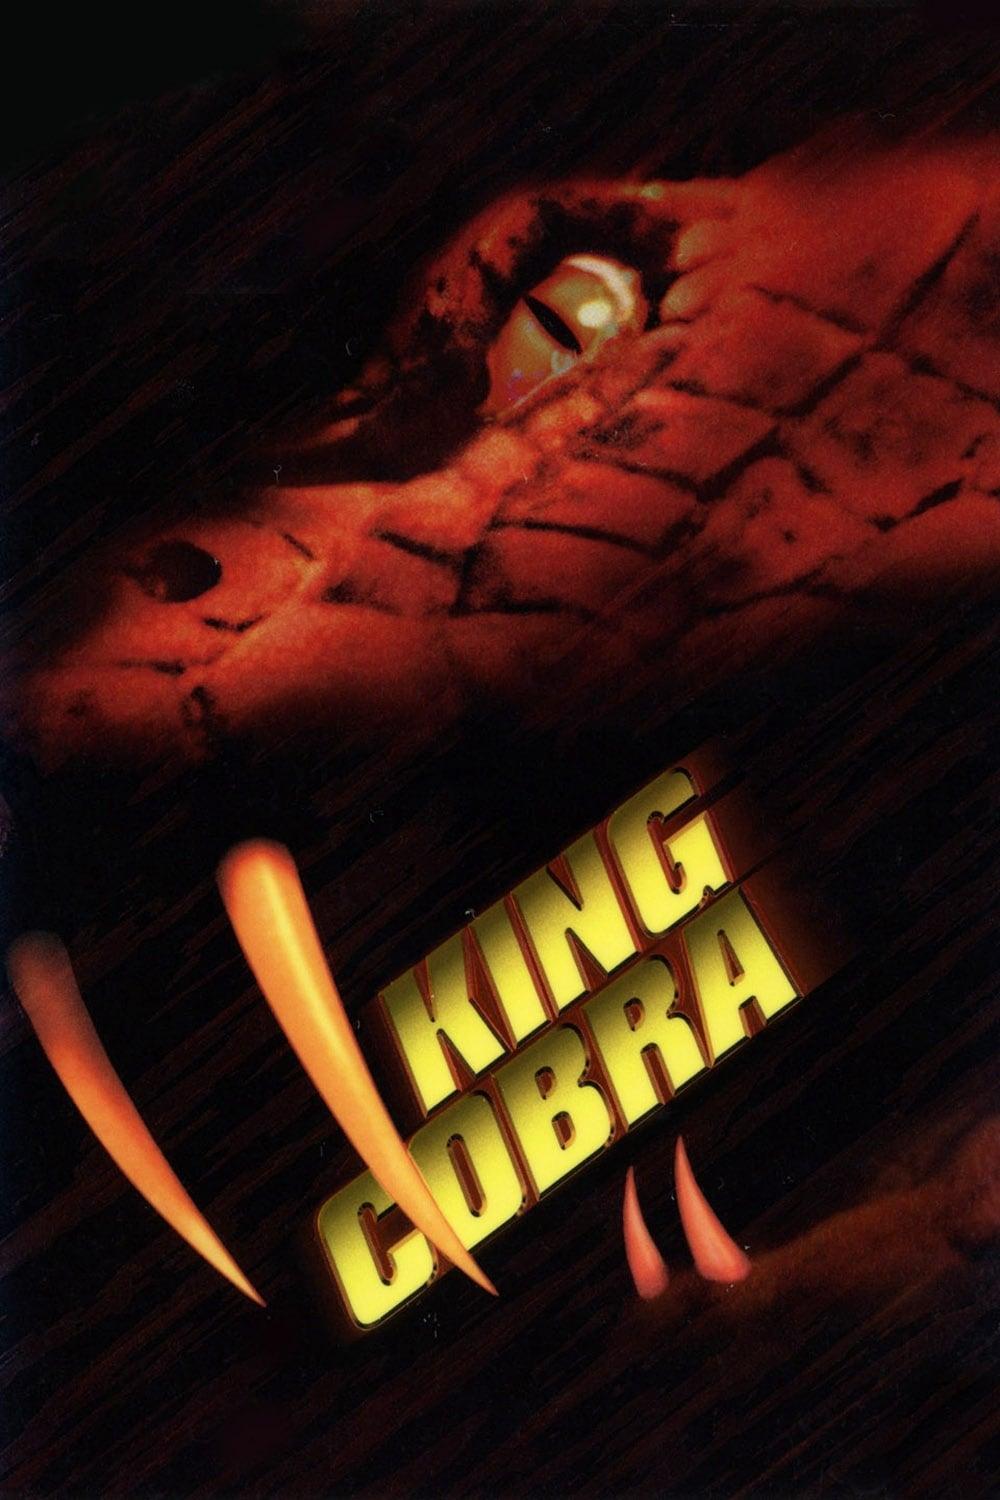 King Cobra poster